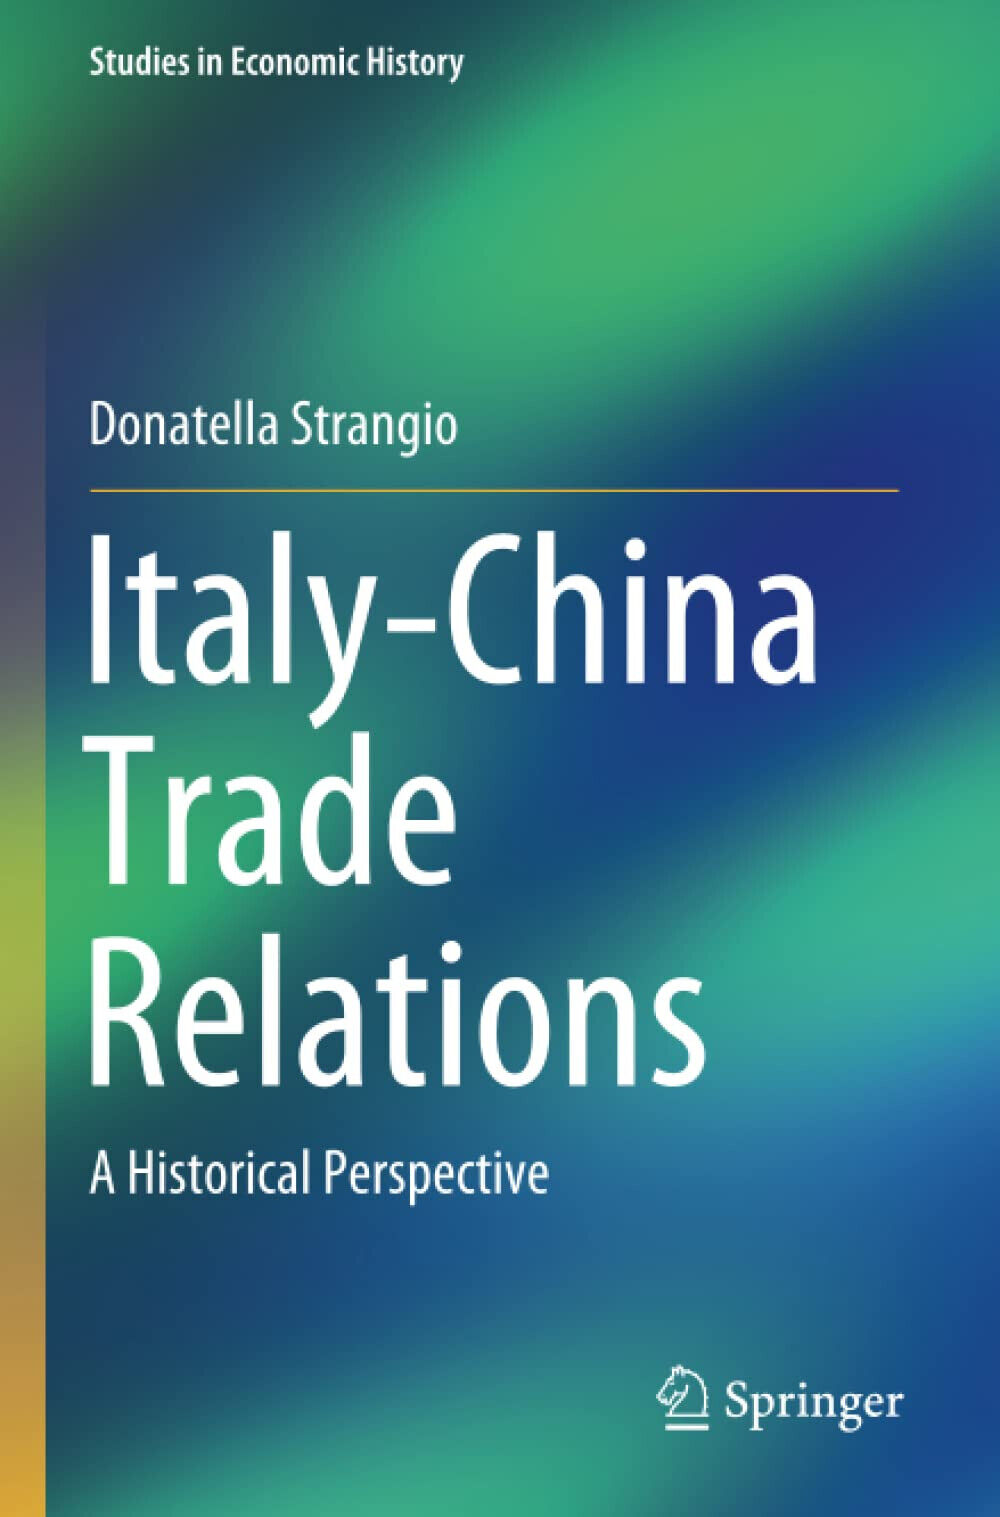 Italy-China Trade Relations - Donatella Strangio - Springer, 2021